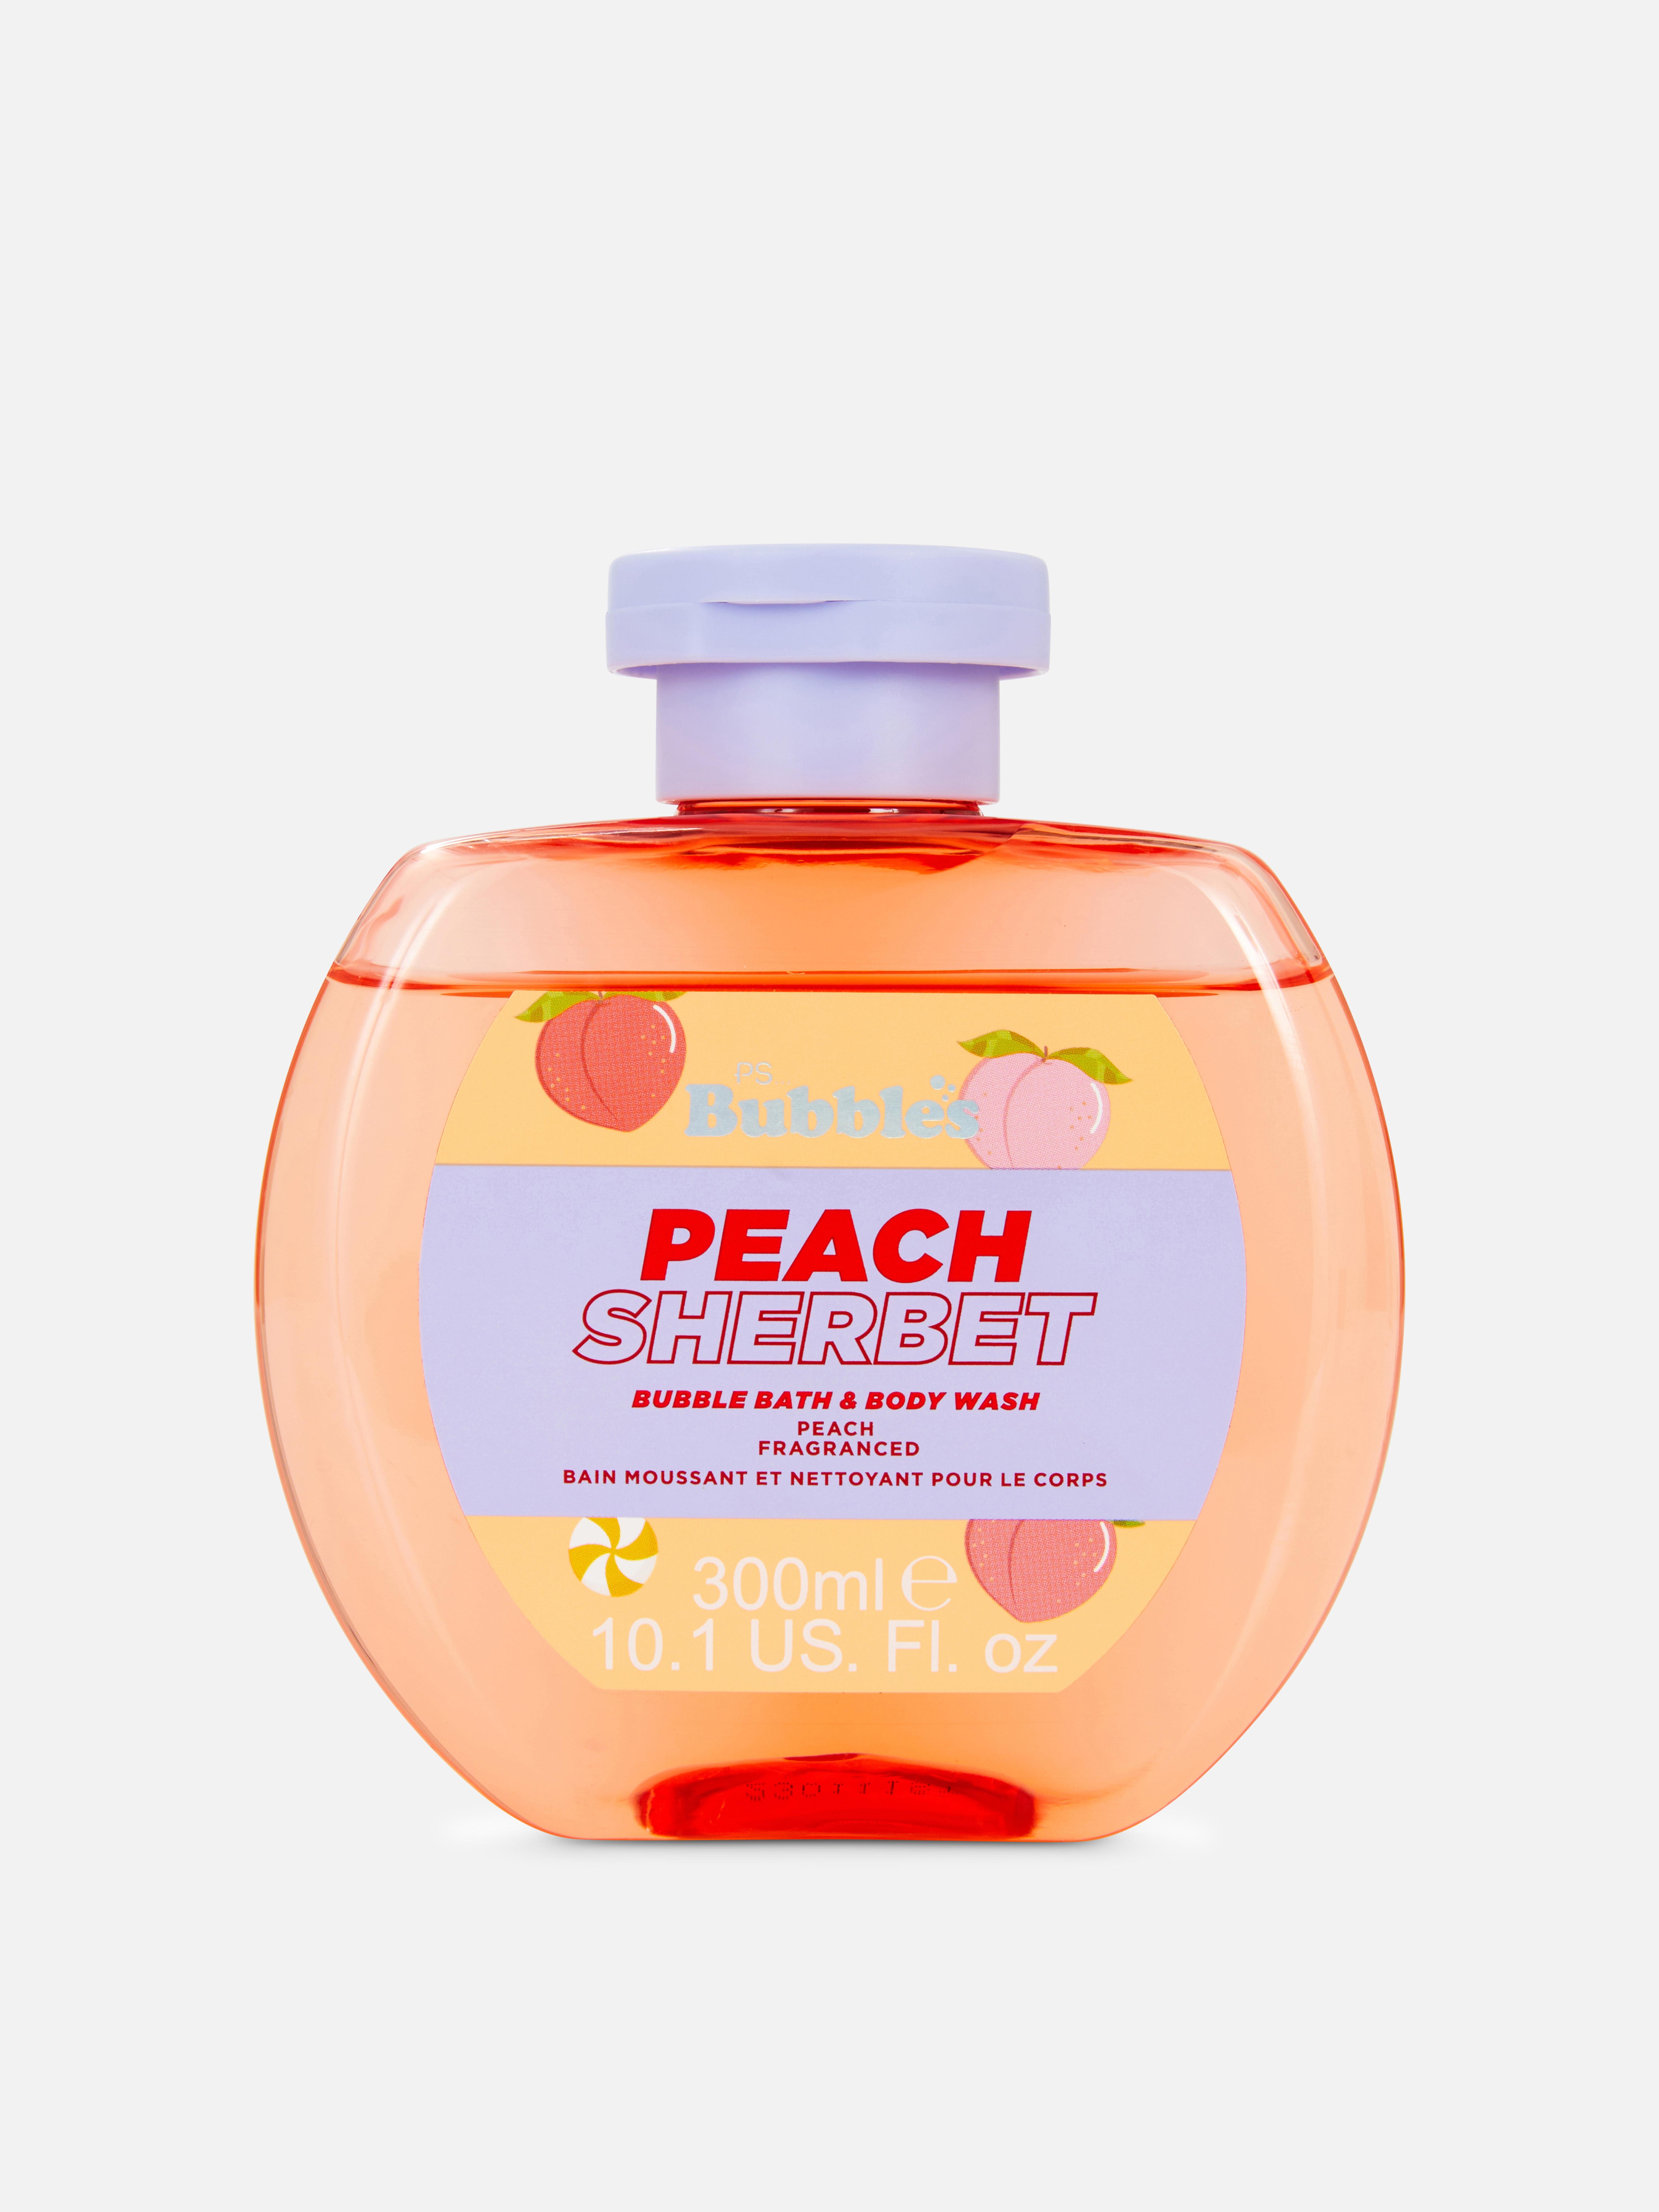 Peach Sherbert Bubble Bath